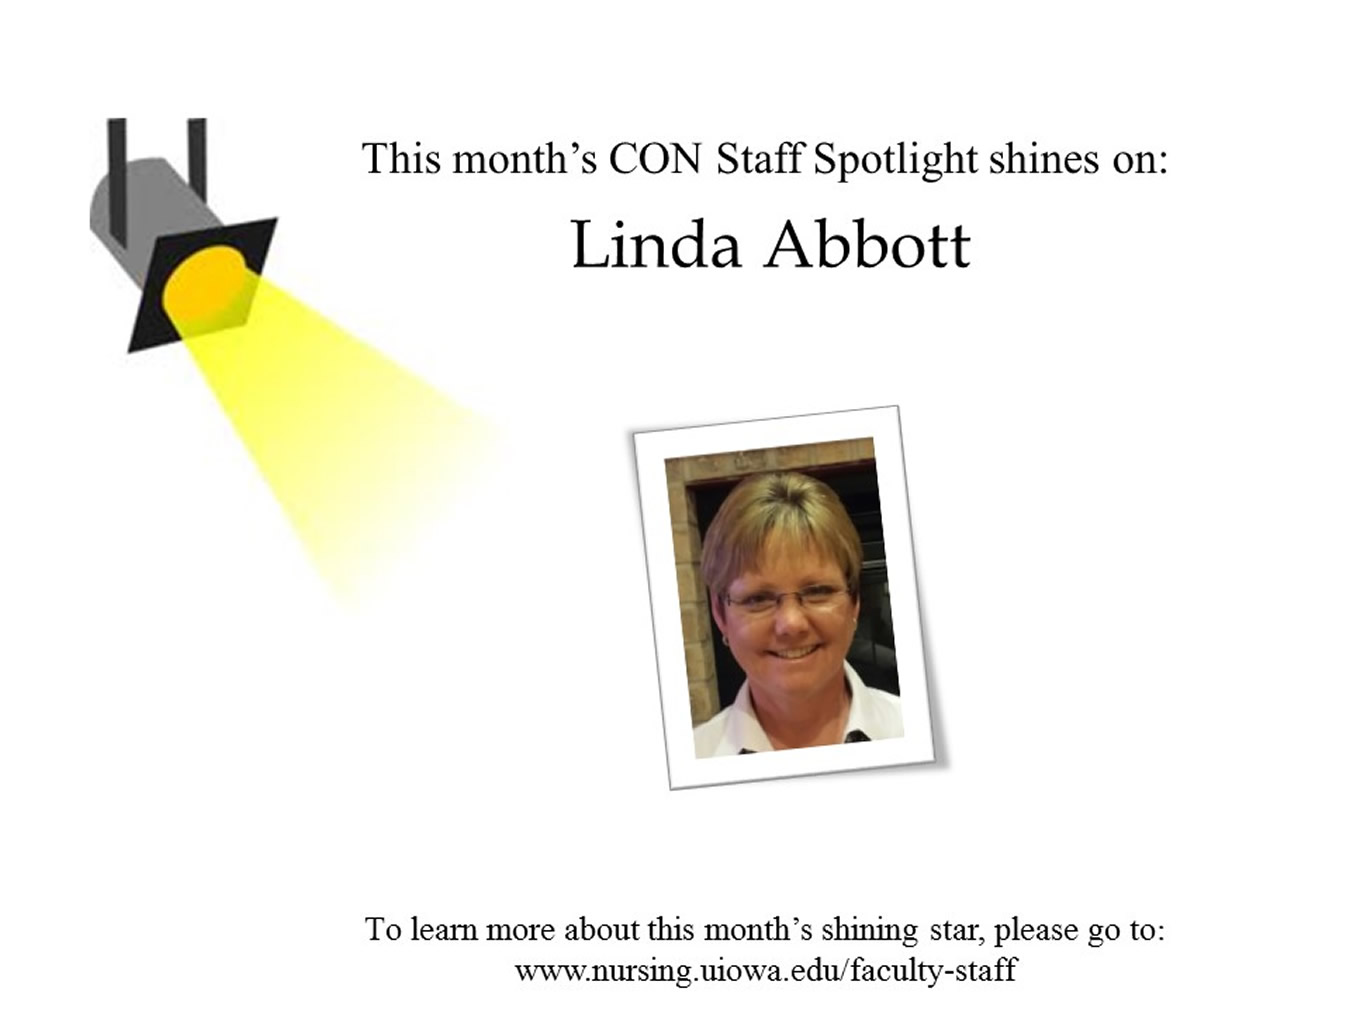 Linda Abbott